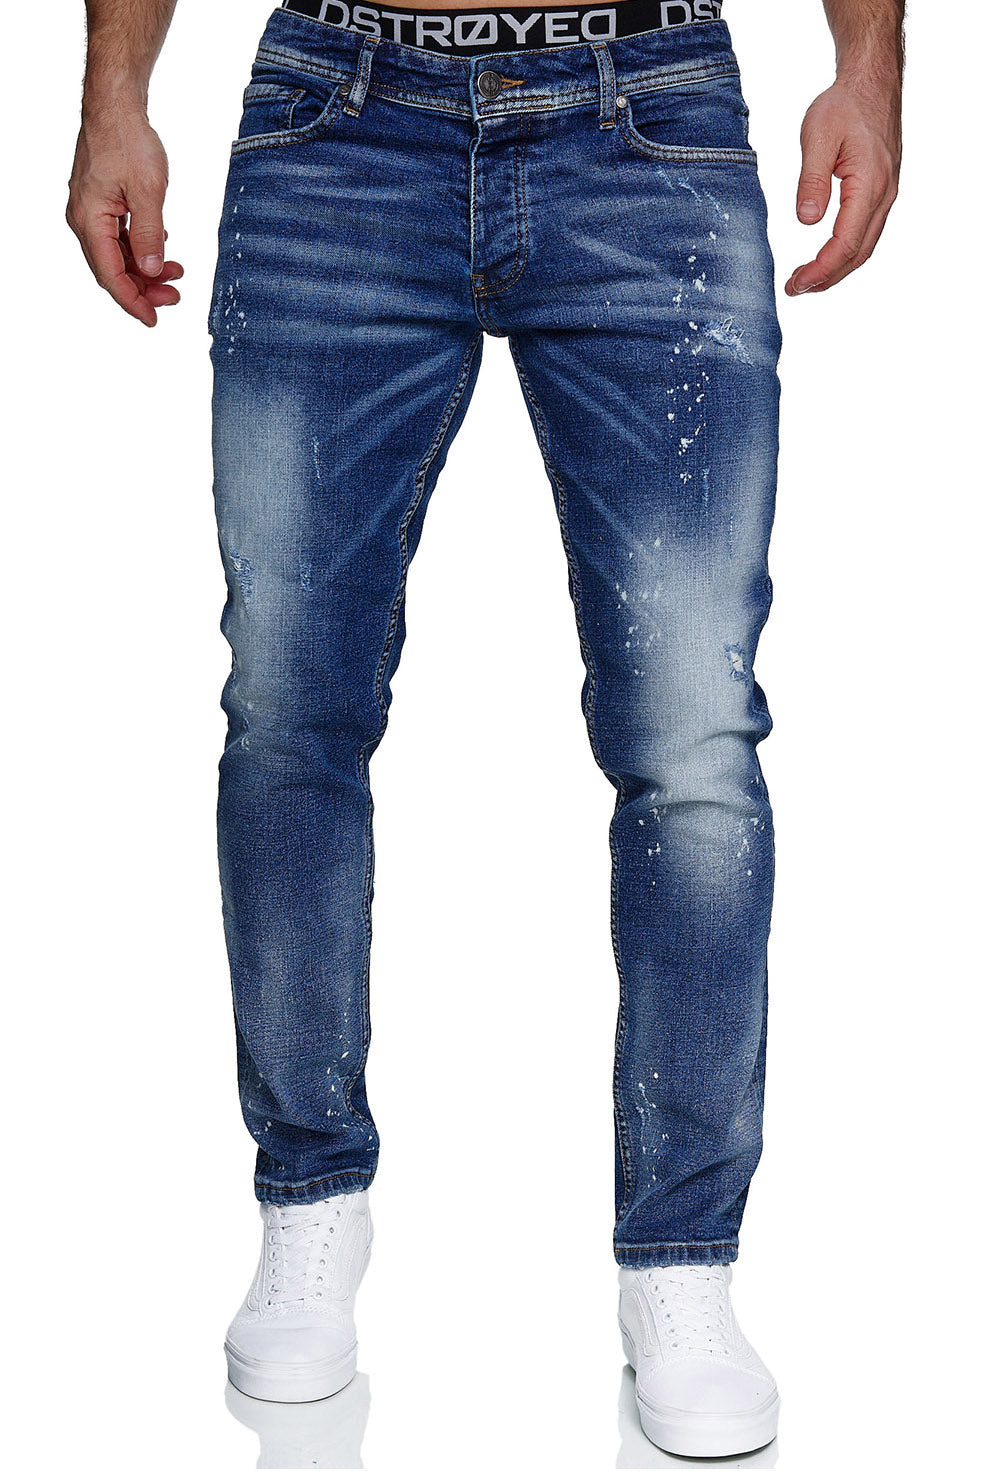 Jeans Slim Fit Jeanshose Stretch Denim Designer Hose 1507-4-Farbe-Blau_final